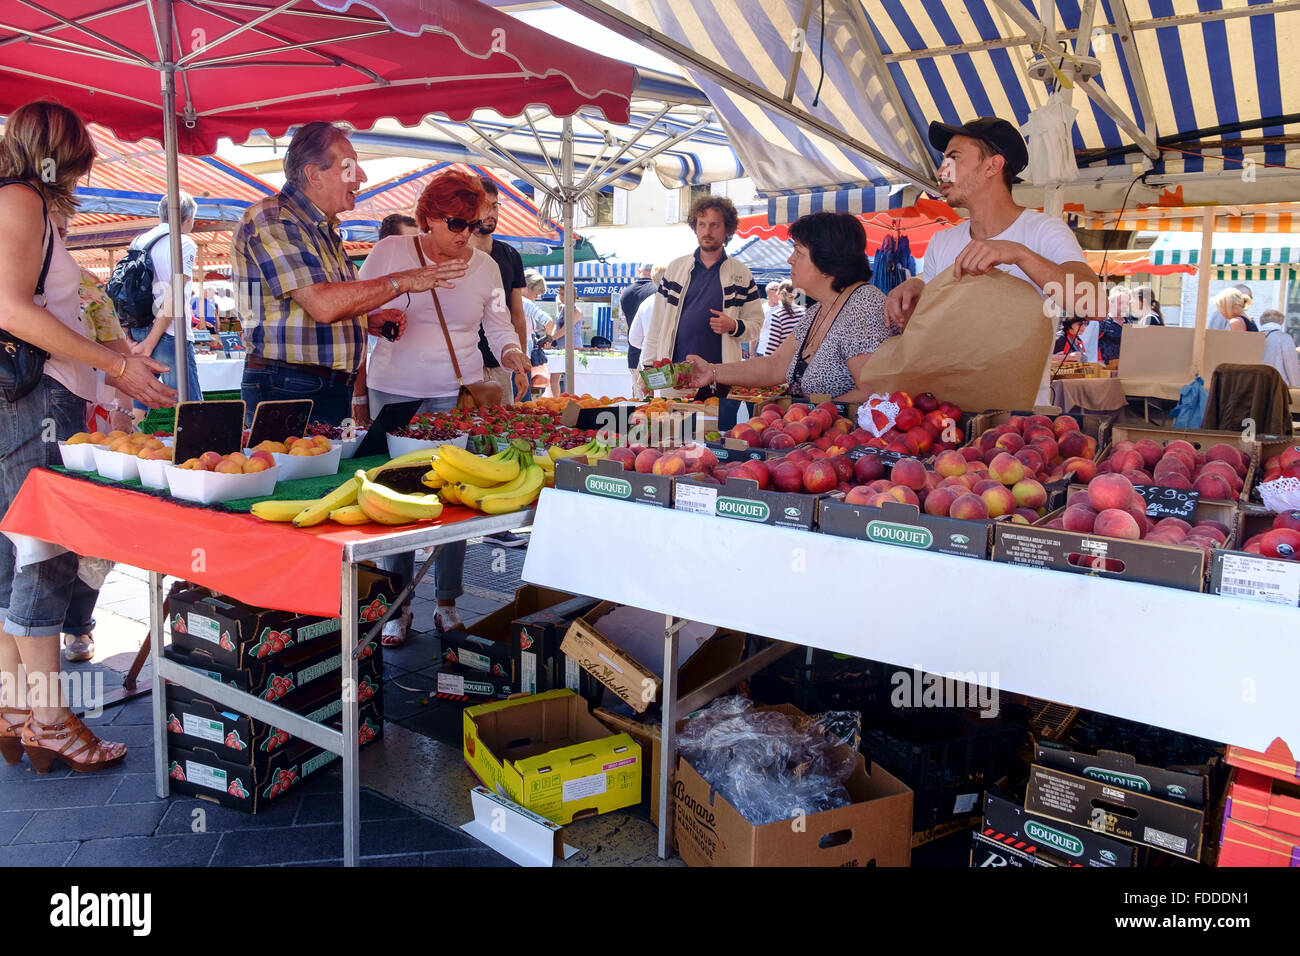 people shopping fruit street market stall france Stock Photo